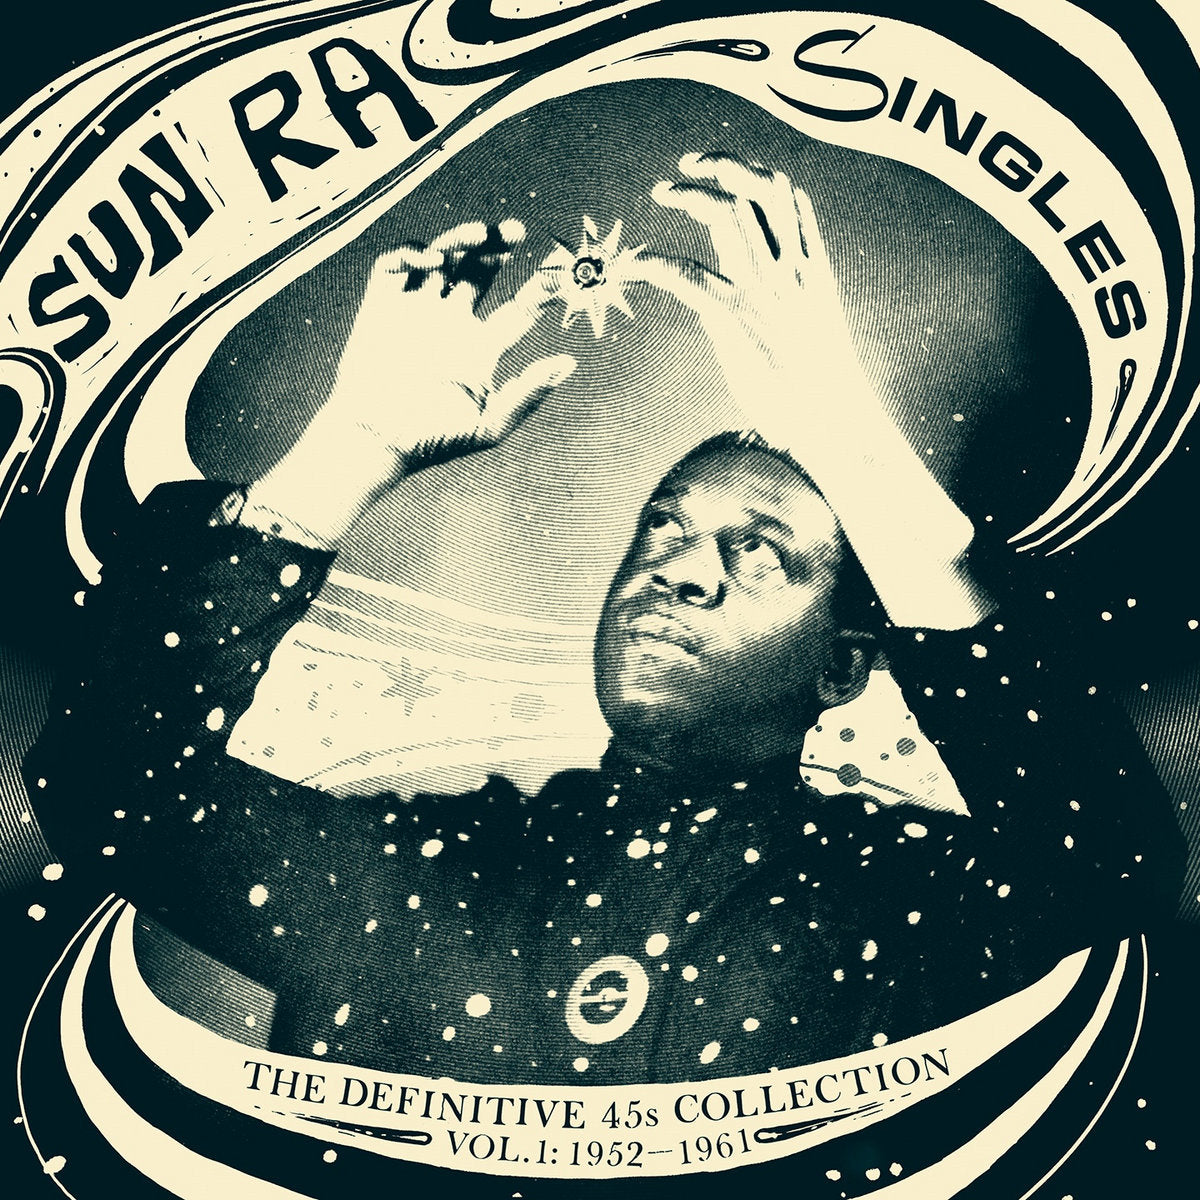 SUN RA - The Definitive Singles Volume 1: The Definitive 45s Collection 1952-1961 (Repress) - 3LP - Gatefold Vinyl